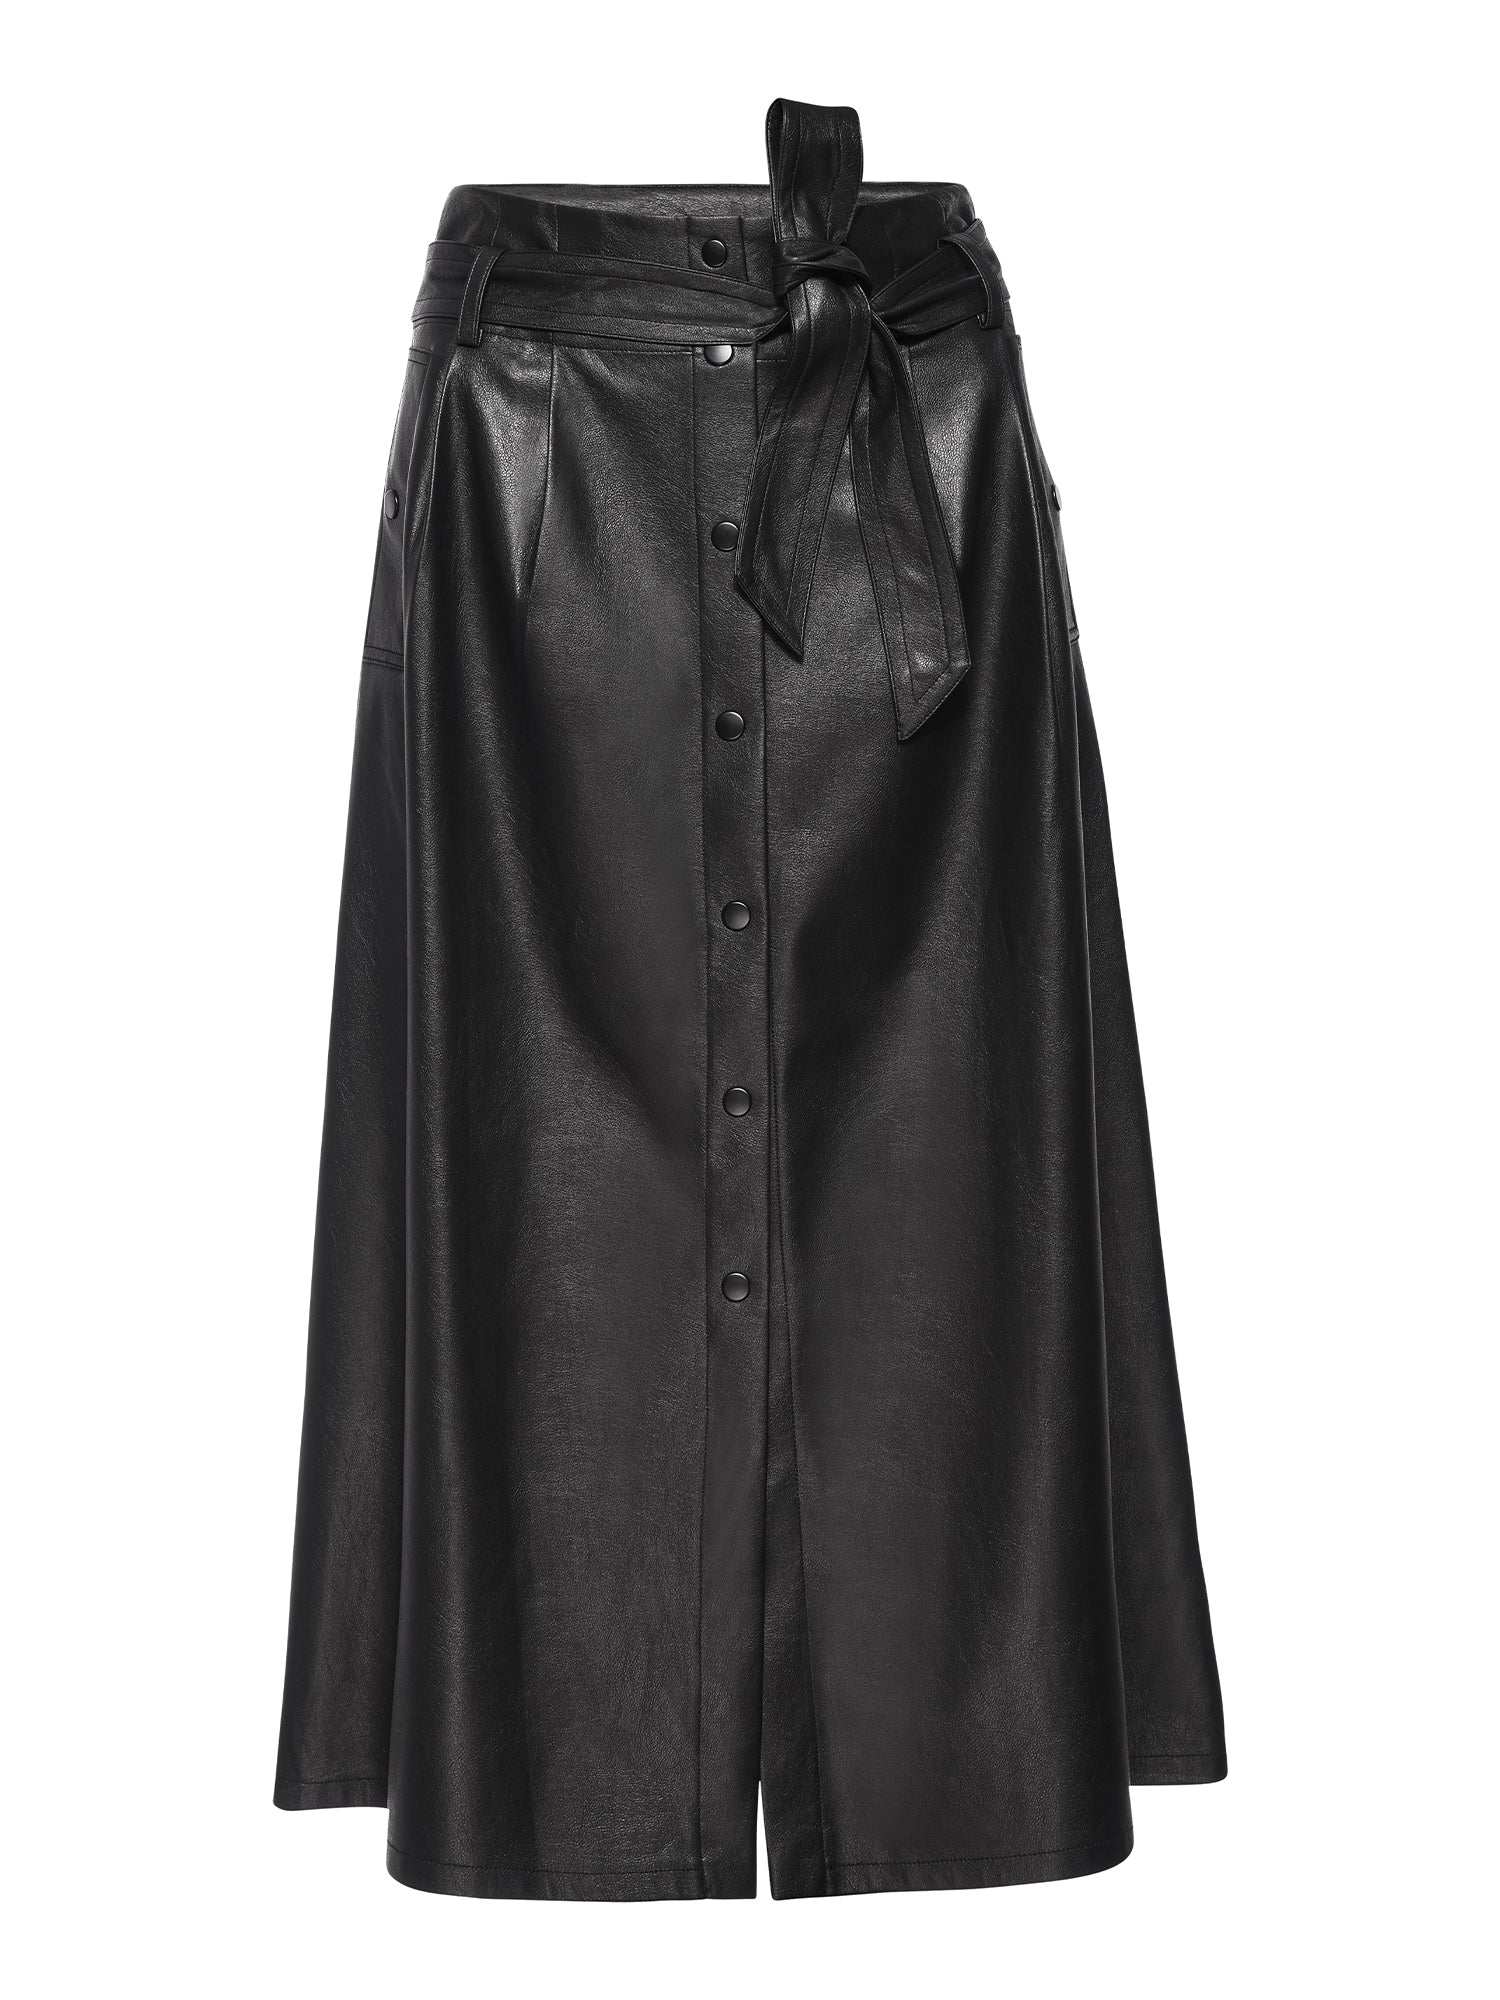 Black Leather-Look High Waist A Line Midi Skirt | New Look